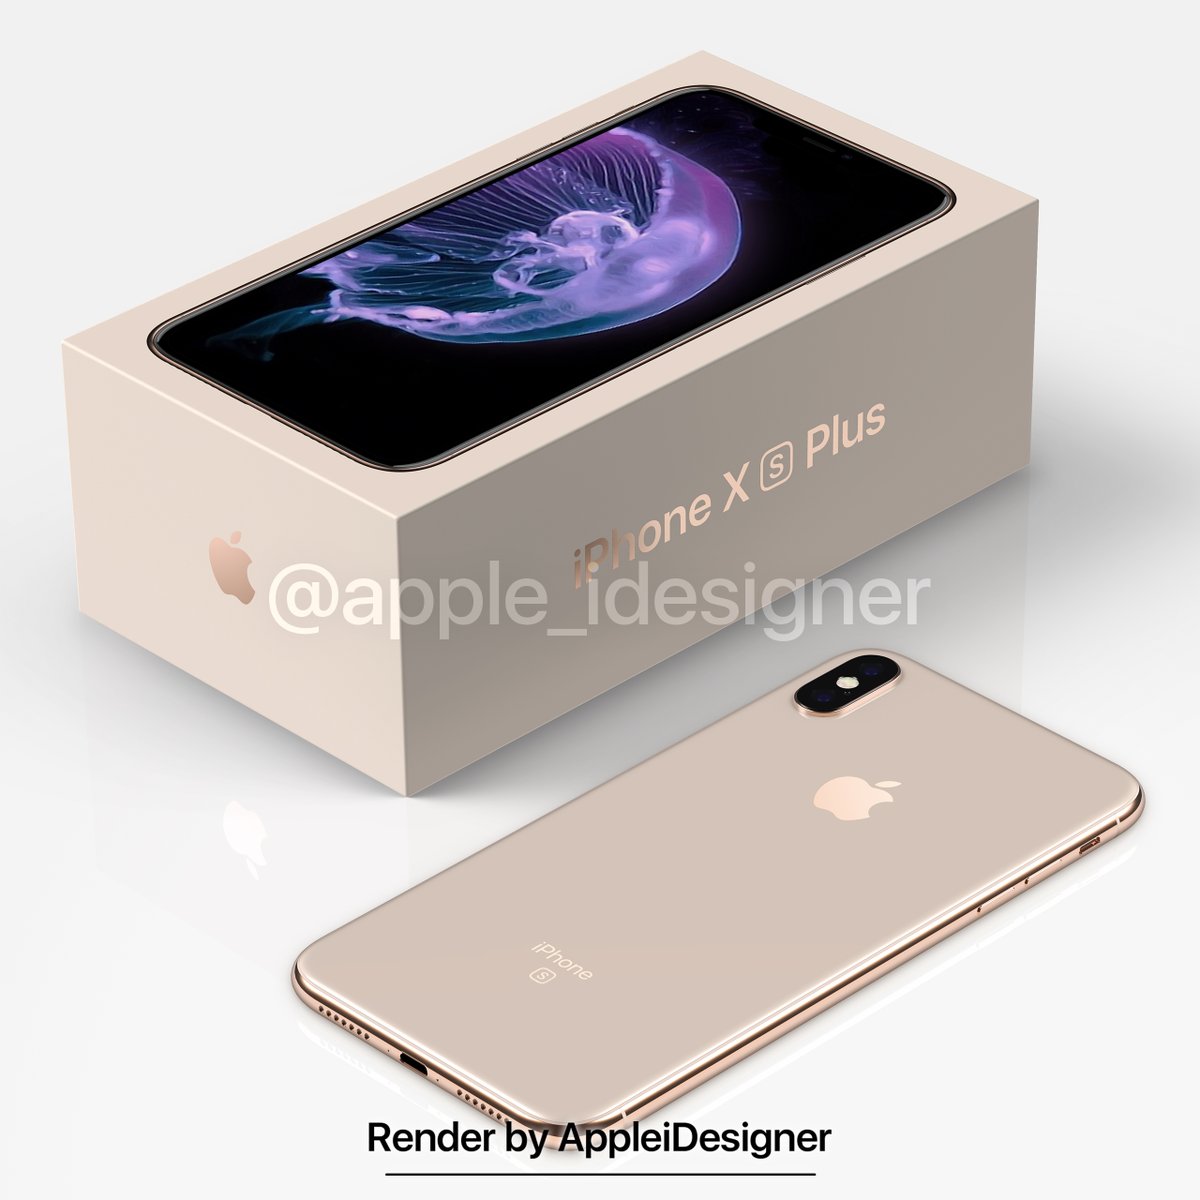 Iphone X Plus Render By Appleidesigner 1